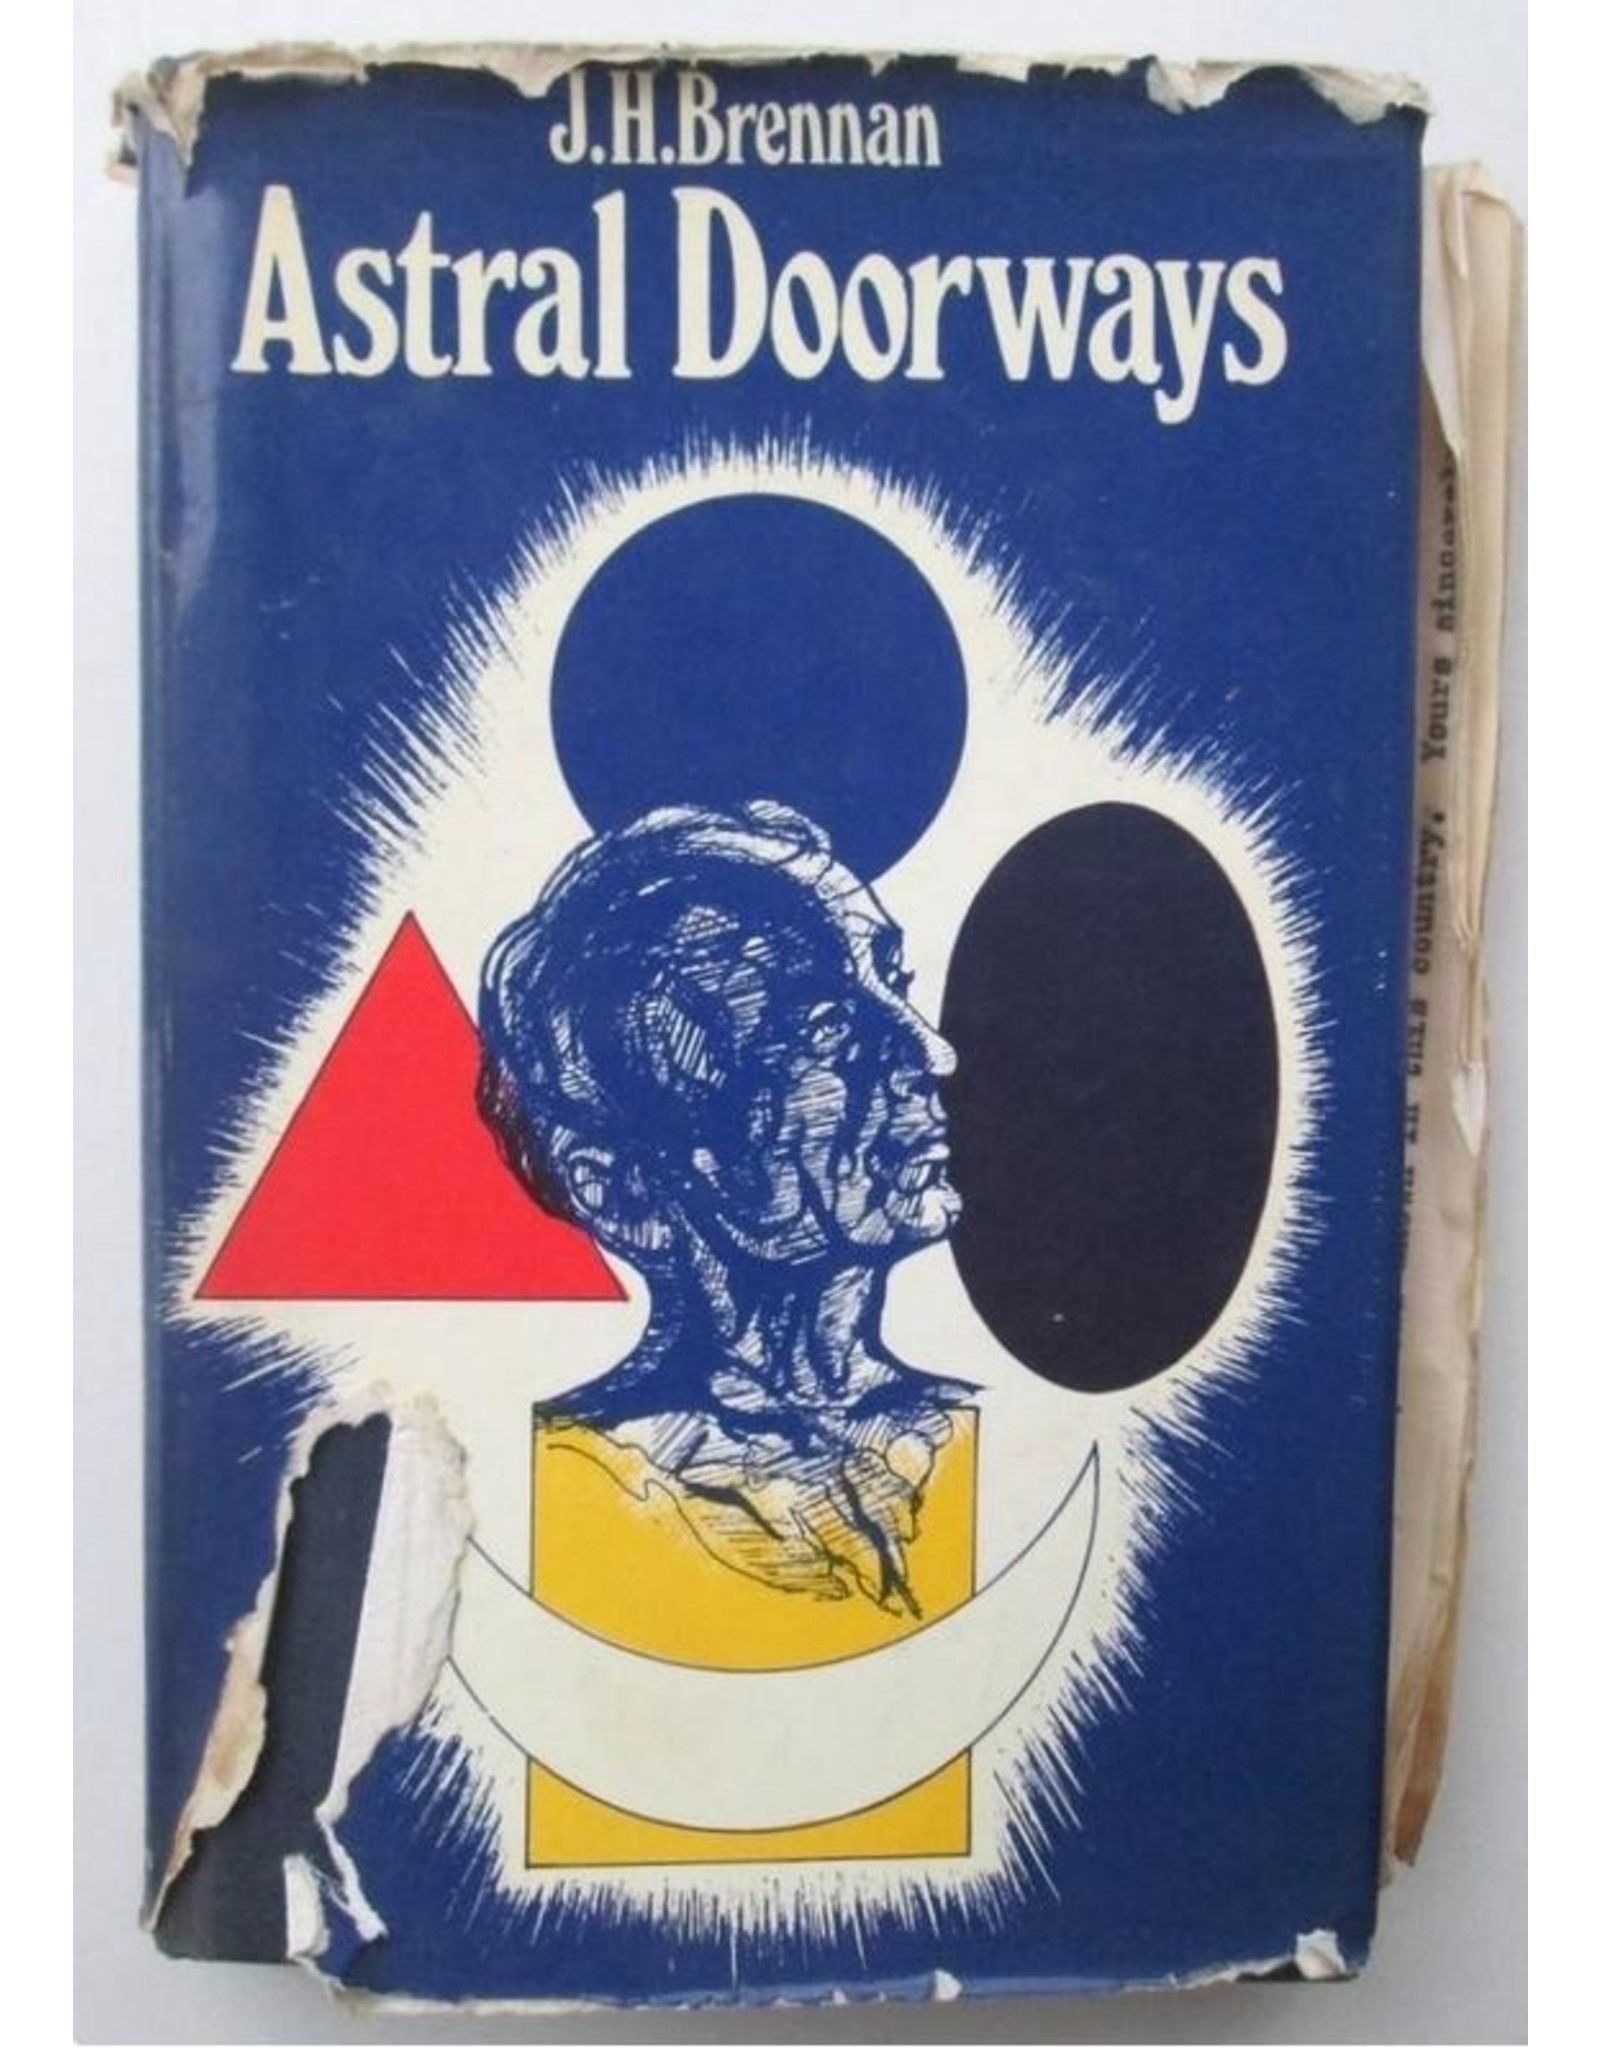 J.H. Brennan - Astral Doorways - 1971 - Arcana Cabana